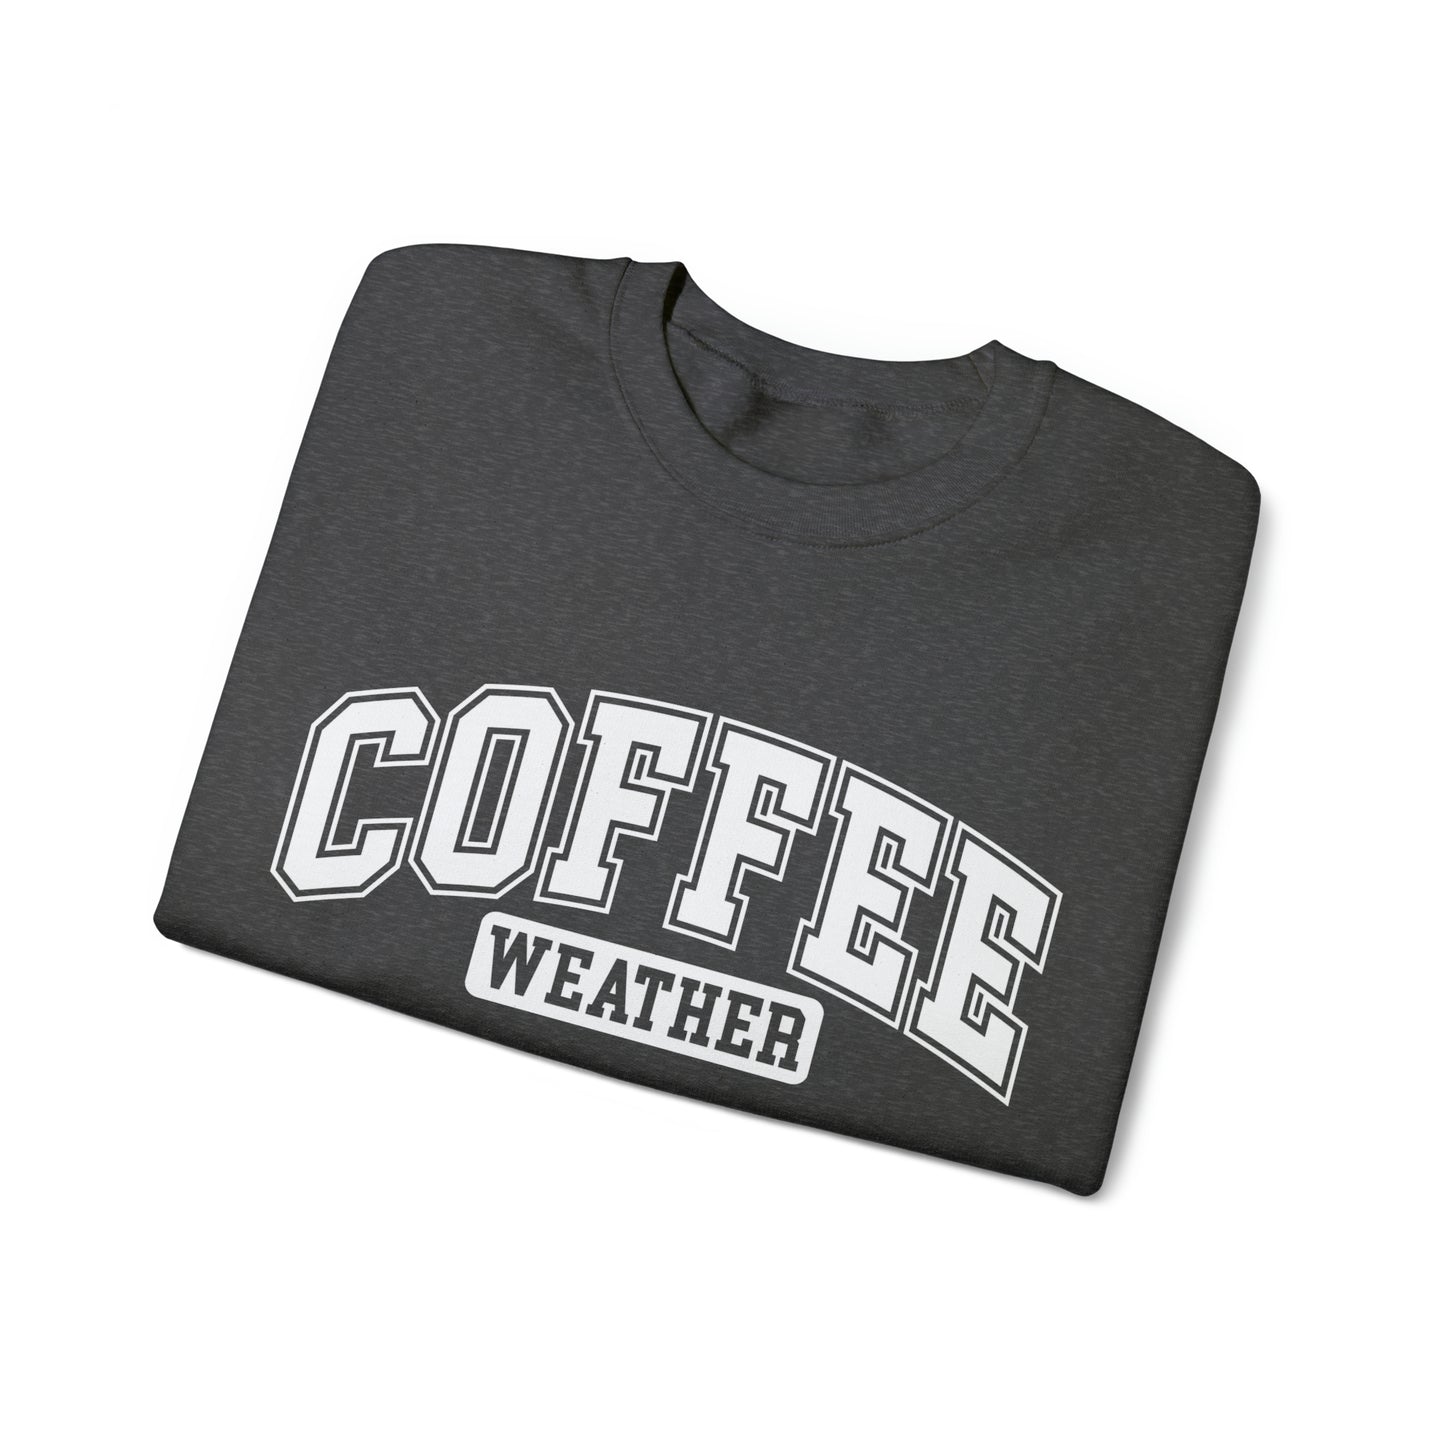 Coffee Weather - Heavy Blend™ Crewneck Sweatshirt